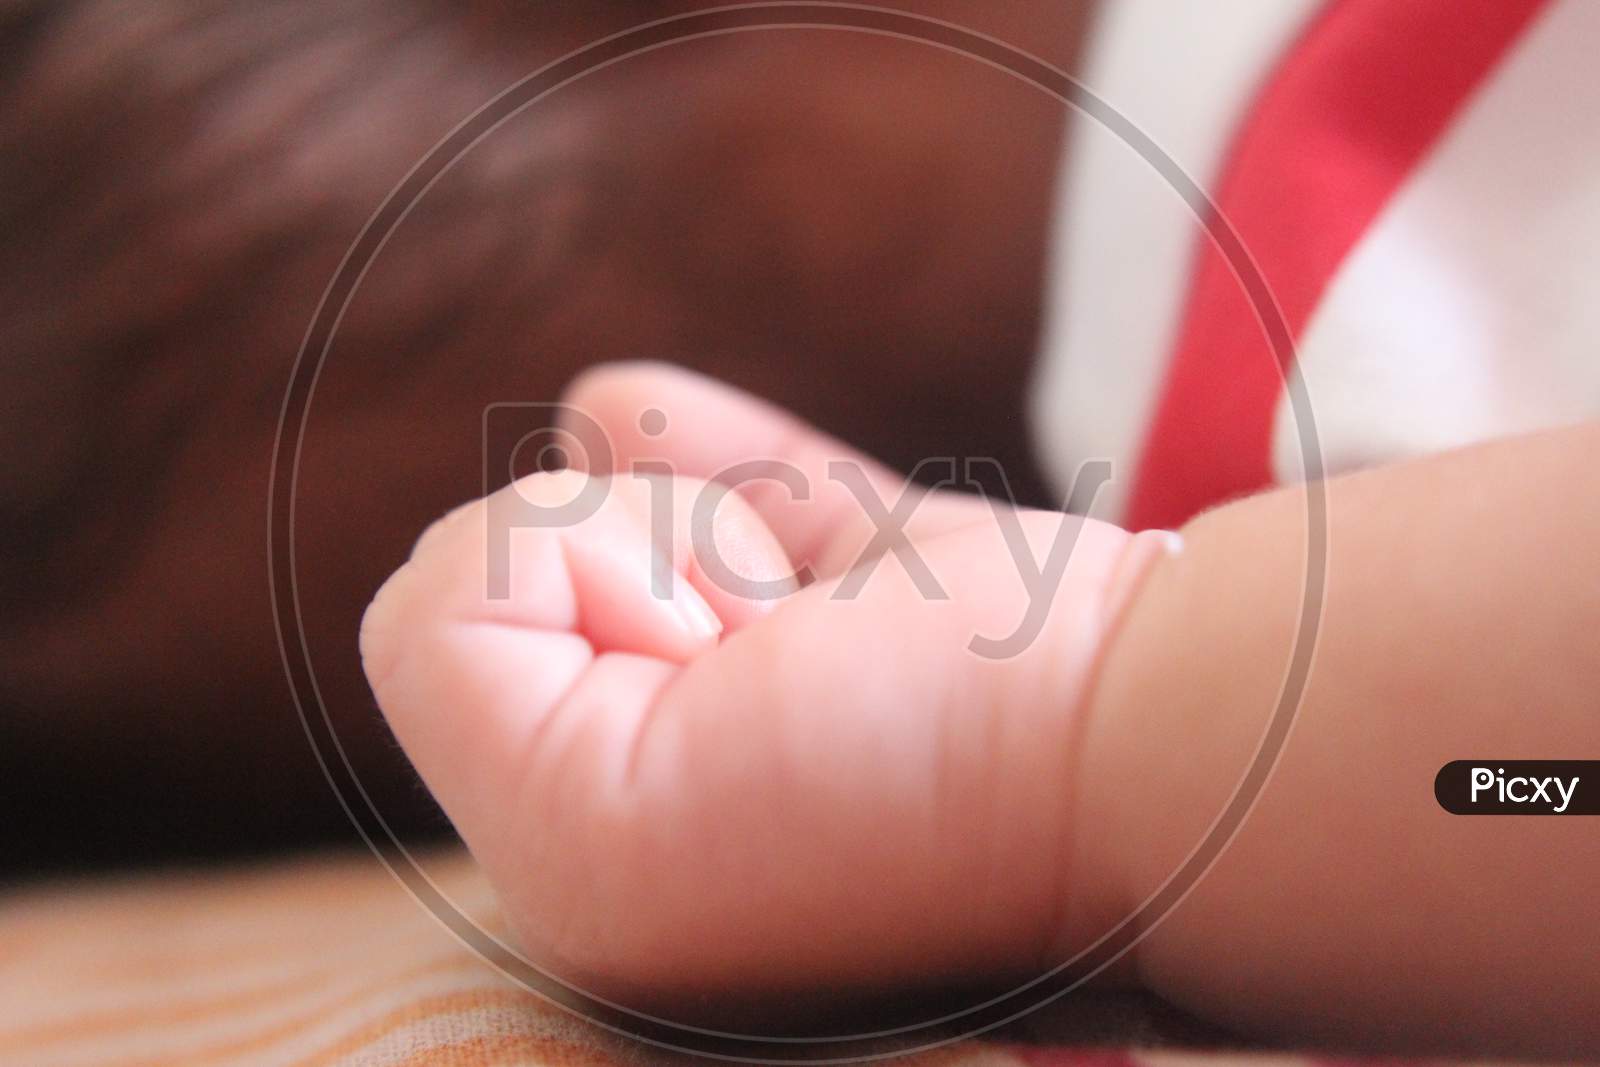 Closeup New Born Infant Baby Hand.